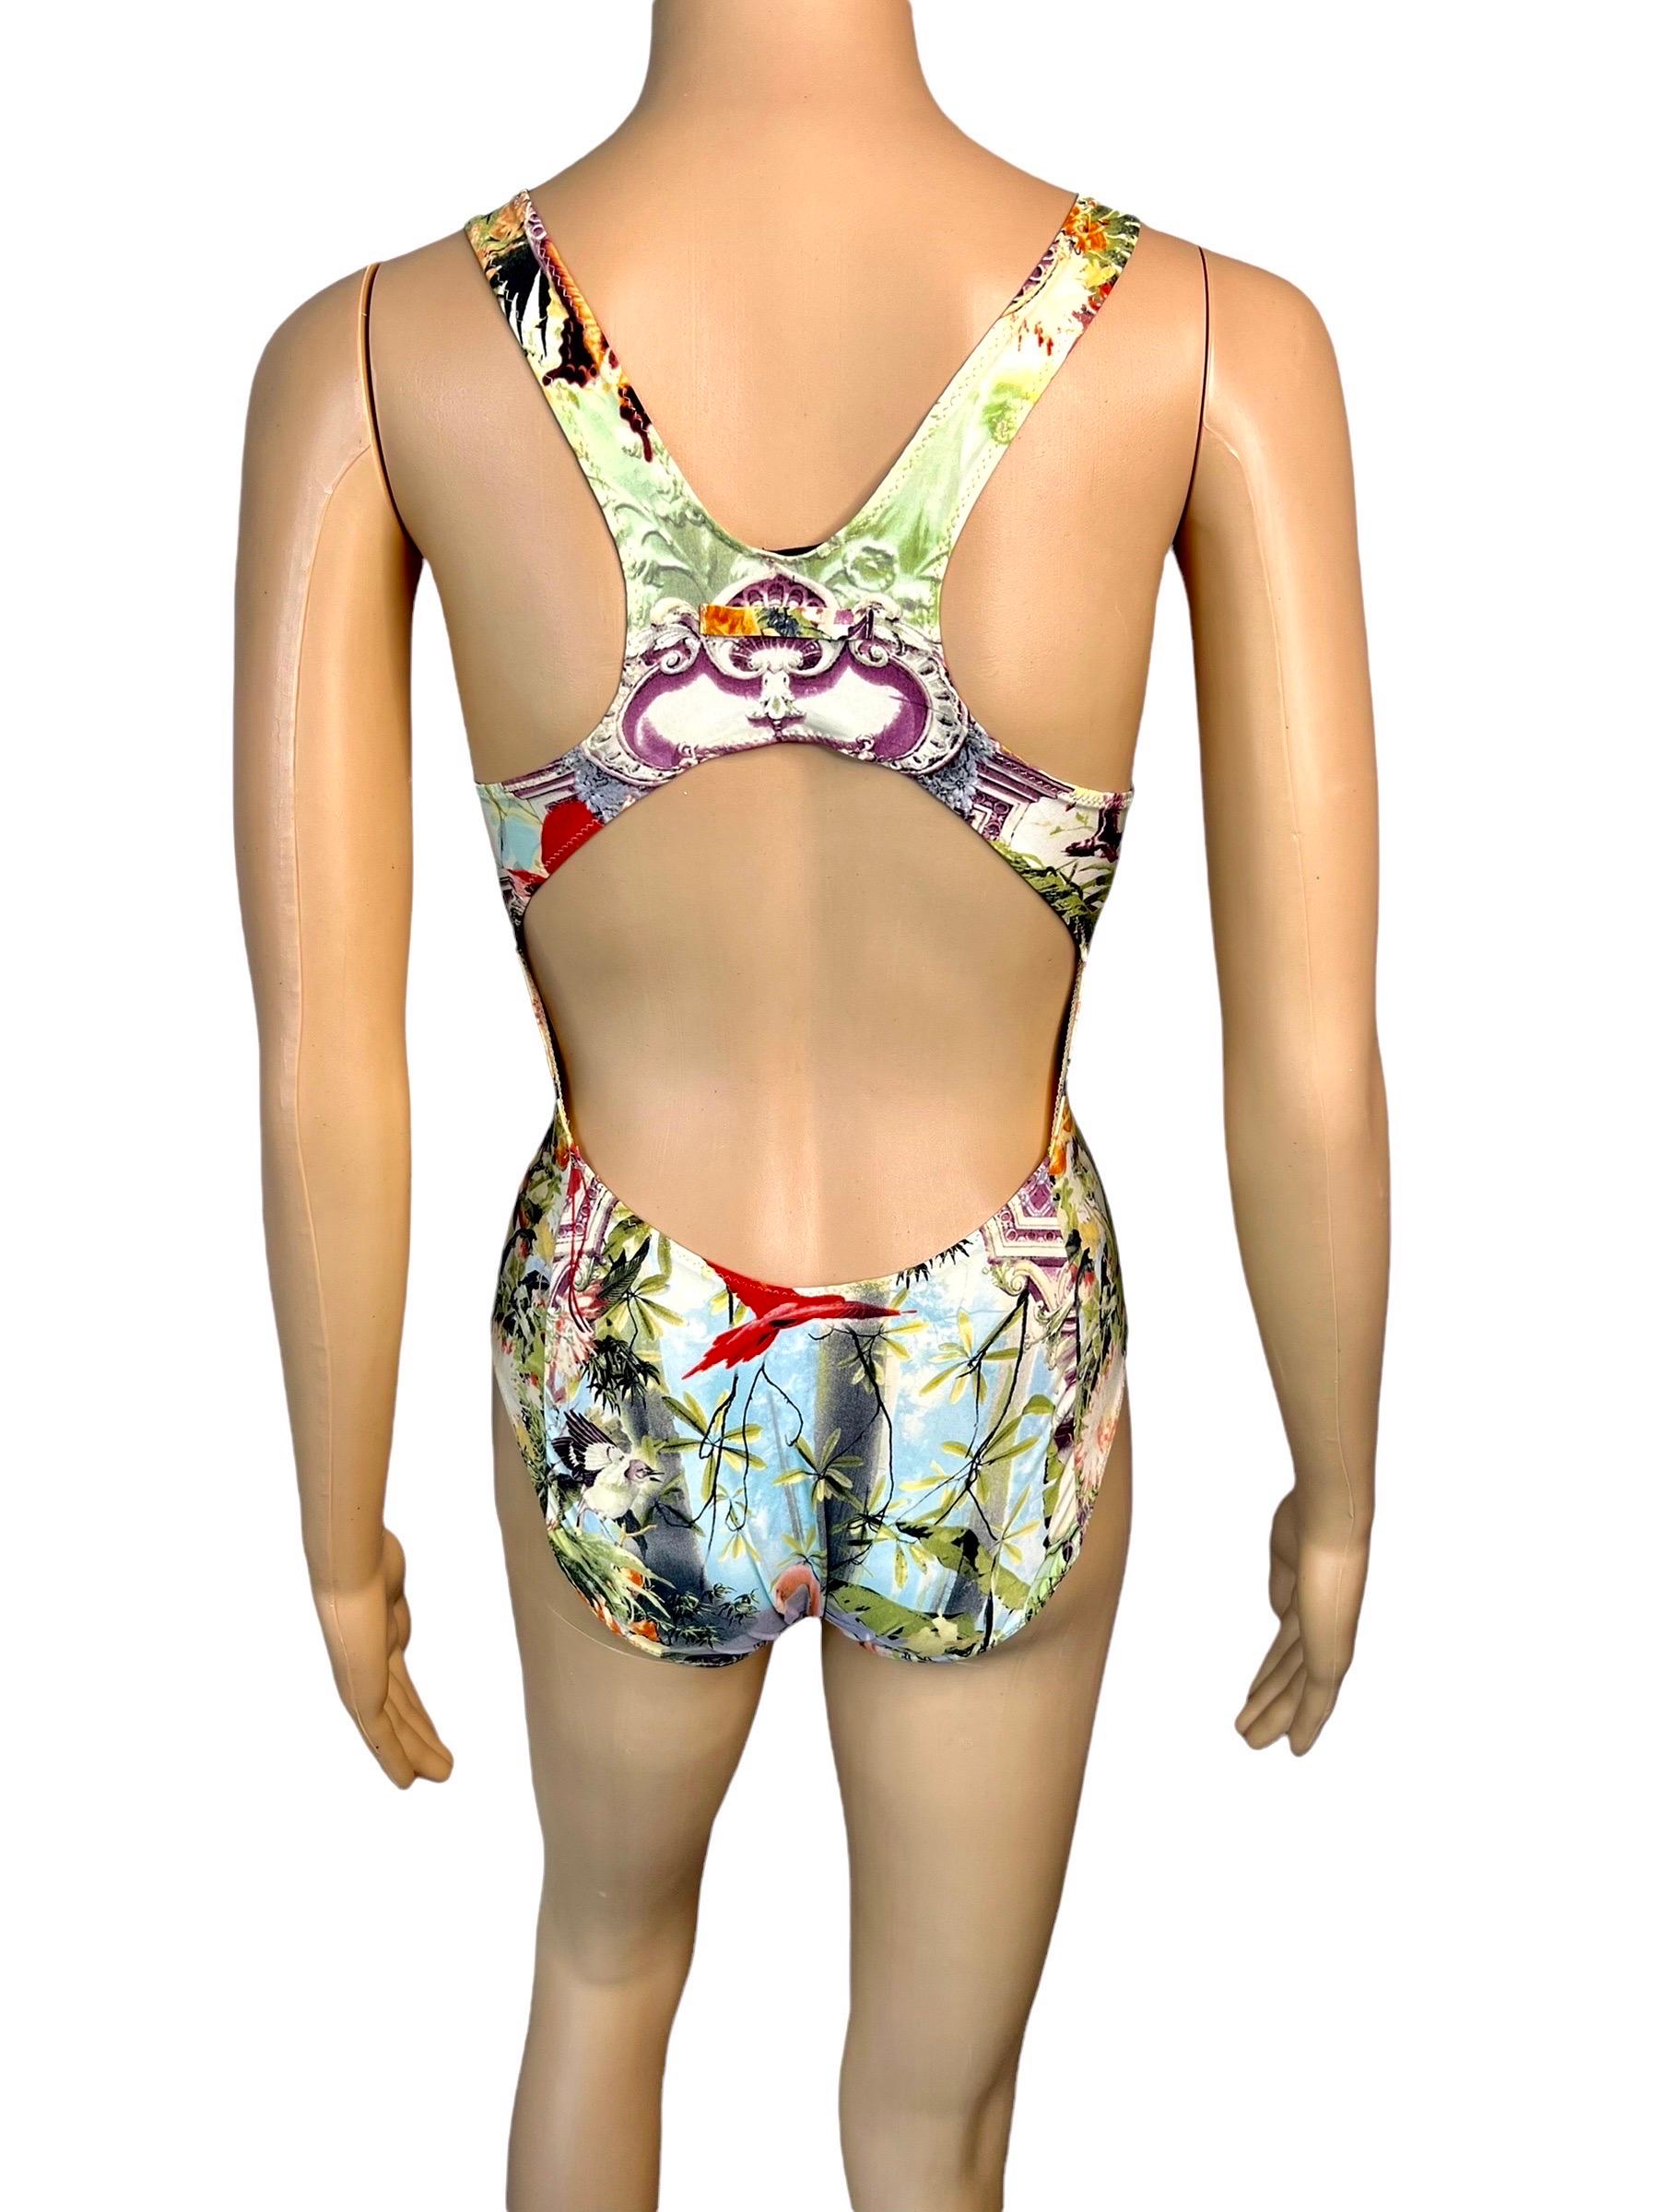 Jean Paul Gaultier Soleil S/S 1999 Flamingo Tropical Bodysuit Swimwear Swimsuit For Sale 2